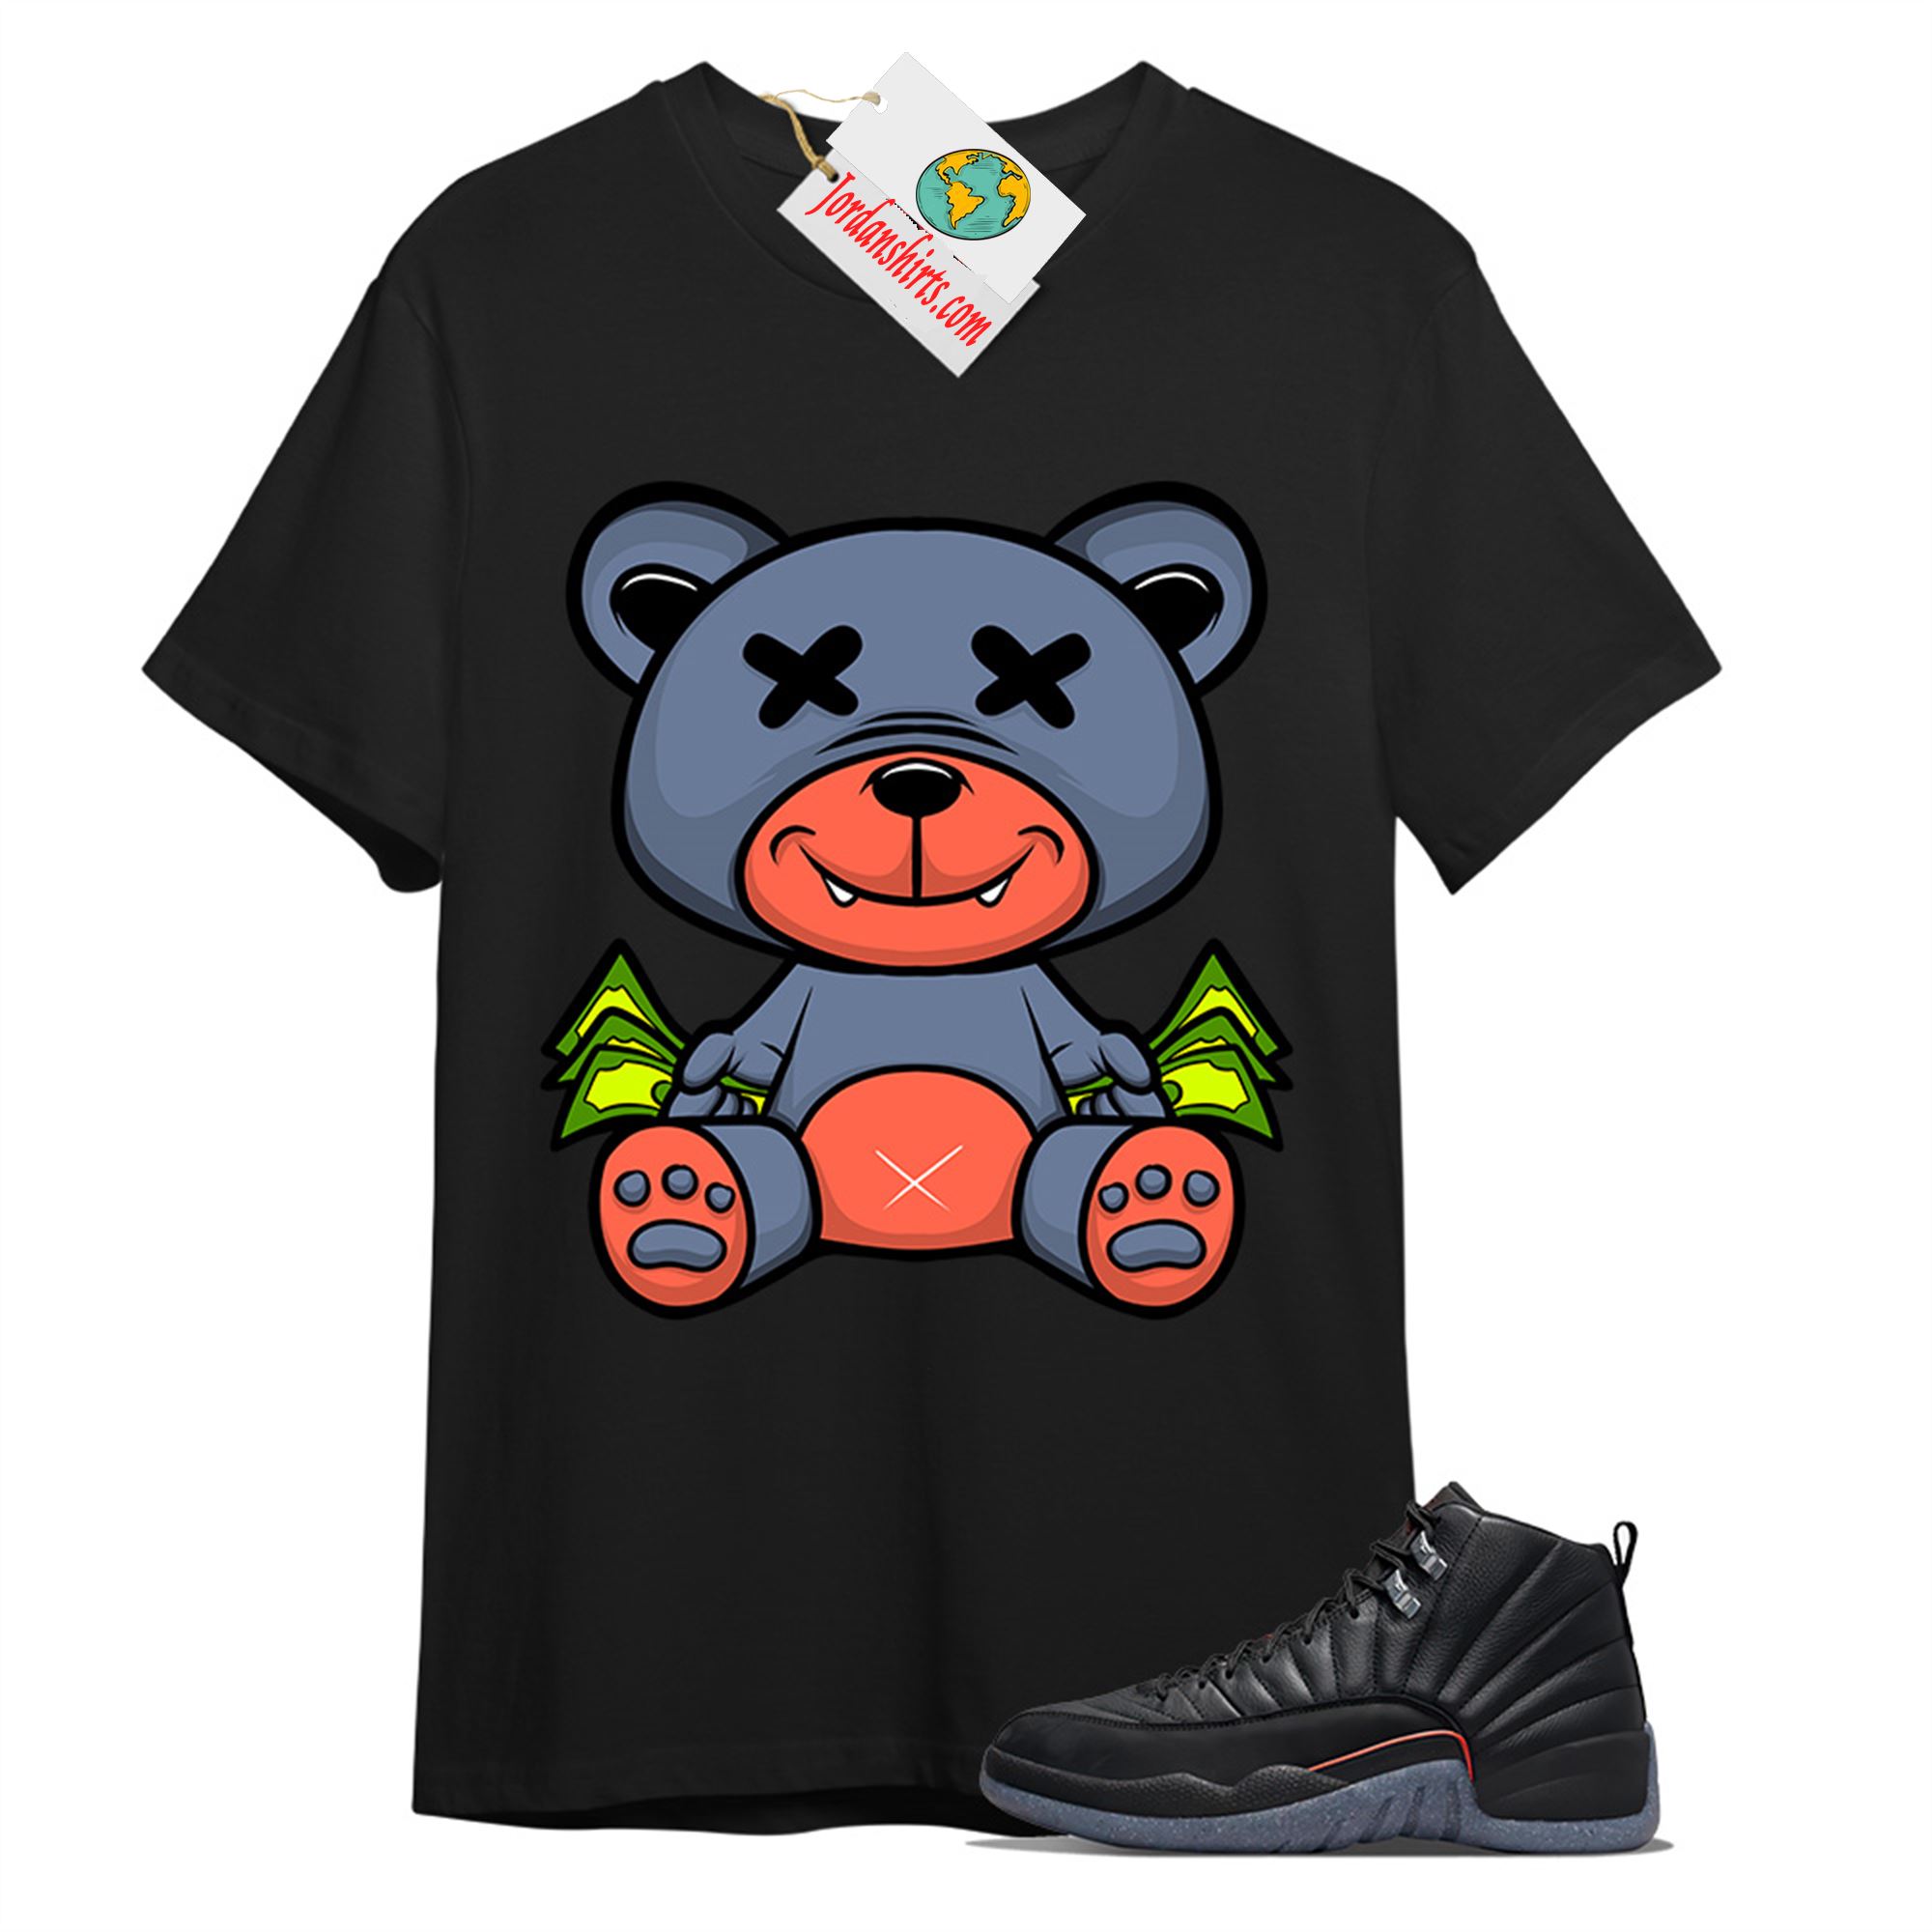 Jordan 12 Shirt, Rich Teddy Bear Black T-shirt Air Jordan 12 Utility Grind 12s Plus Size Up To 5xl